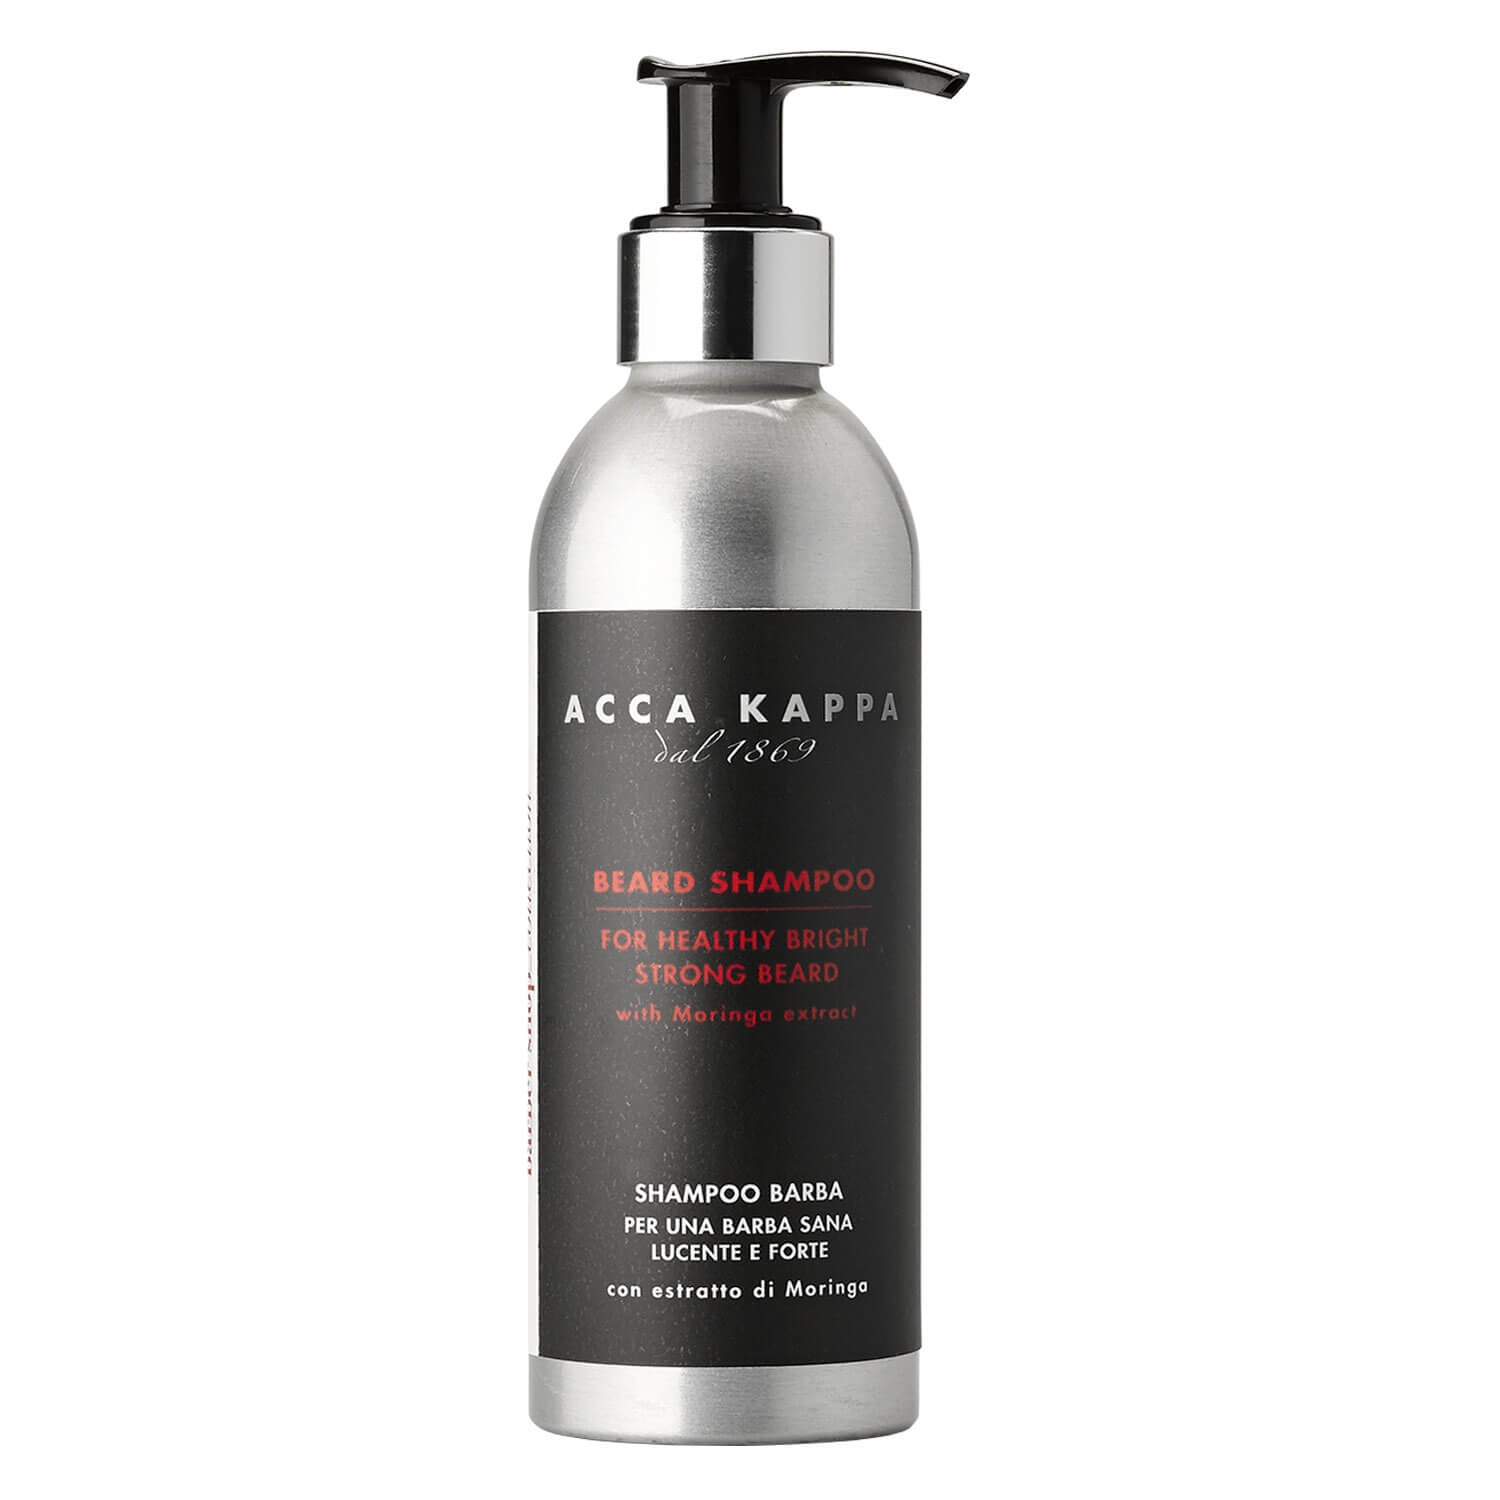 Produktbild von ACCA KAPPA - Beard Shampoo